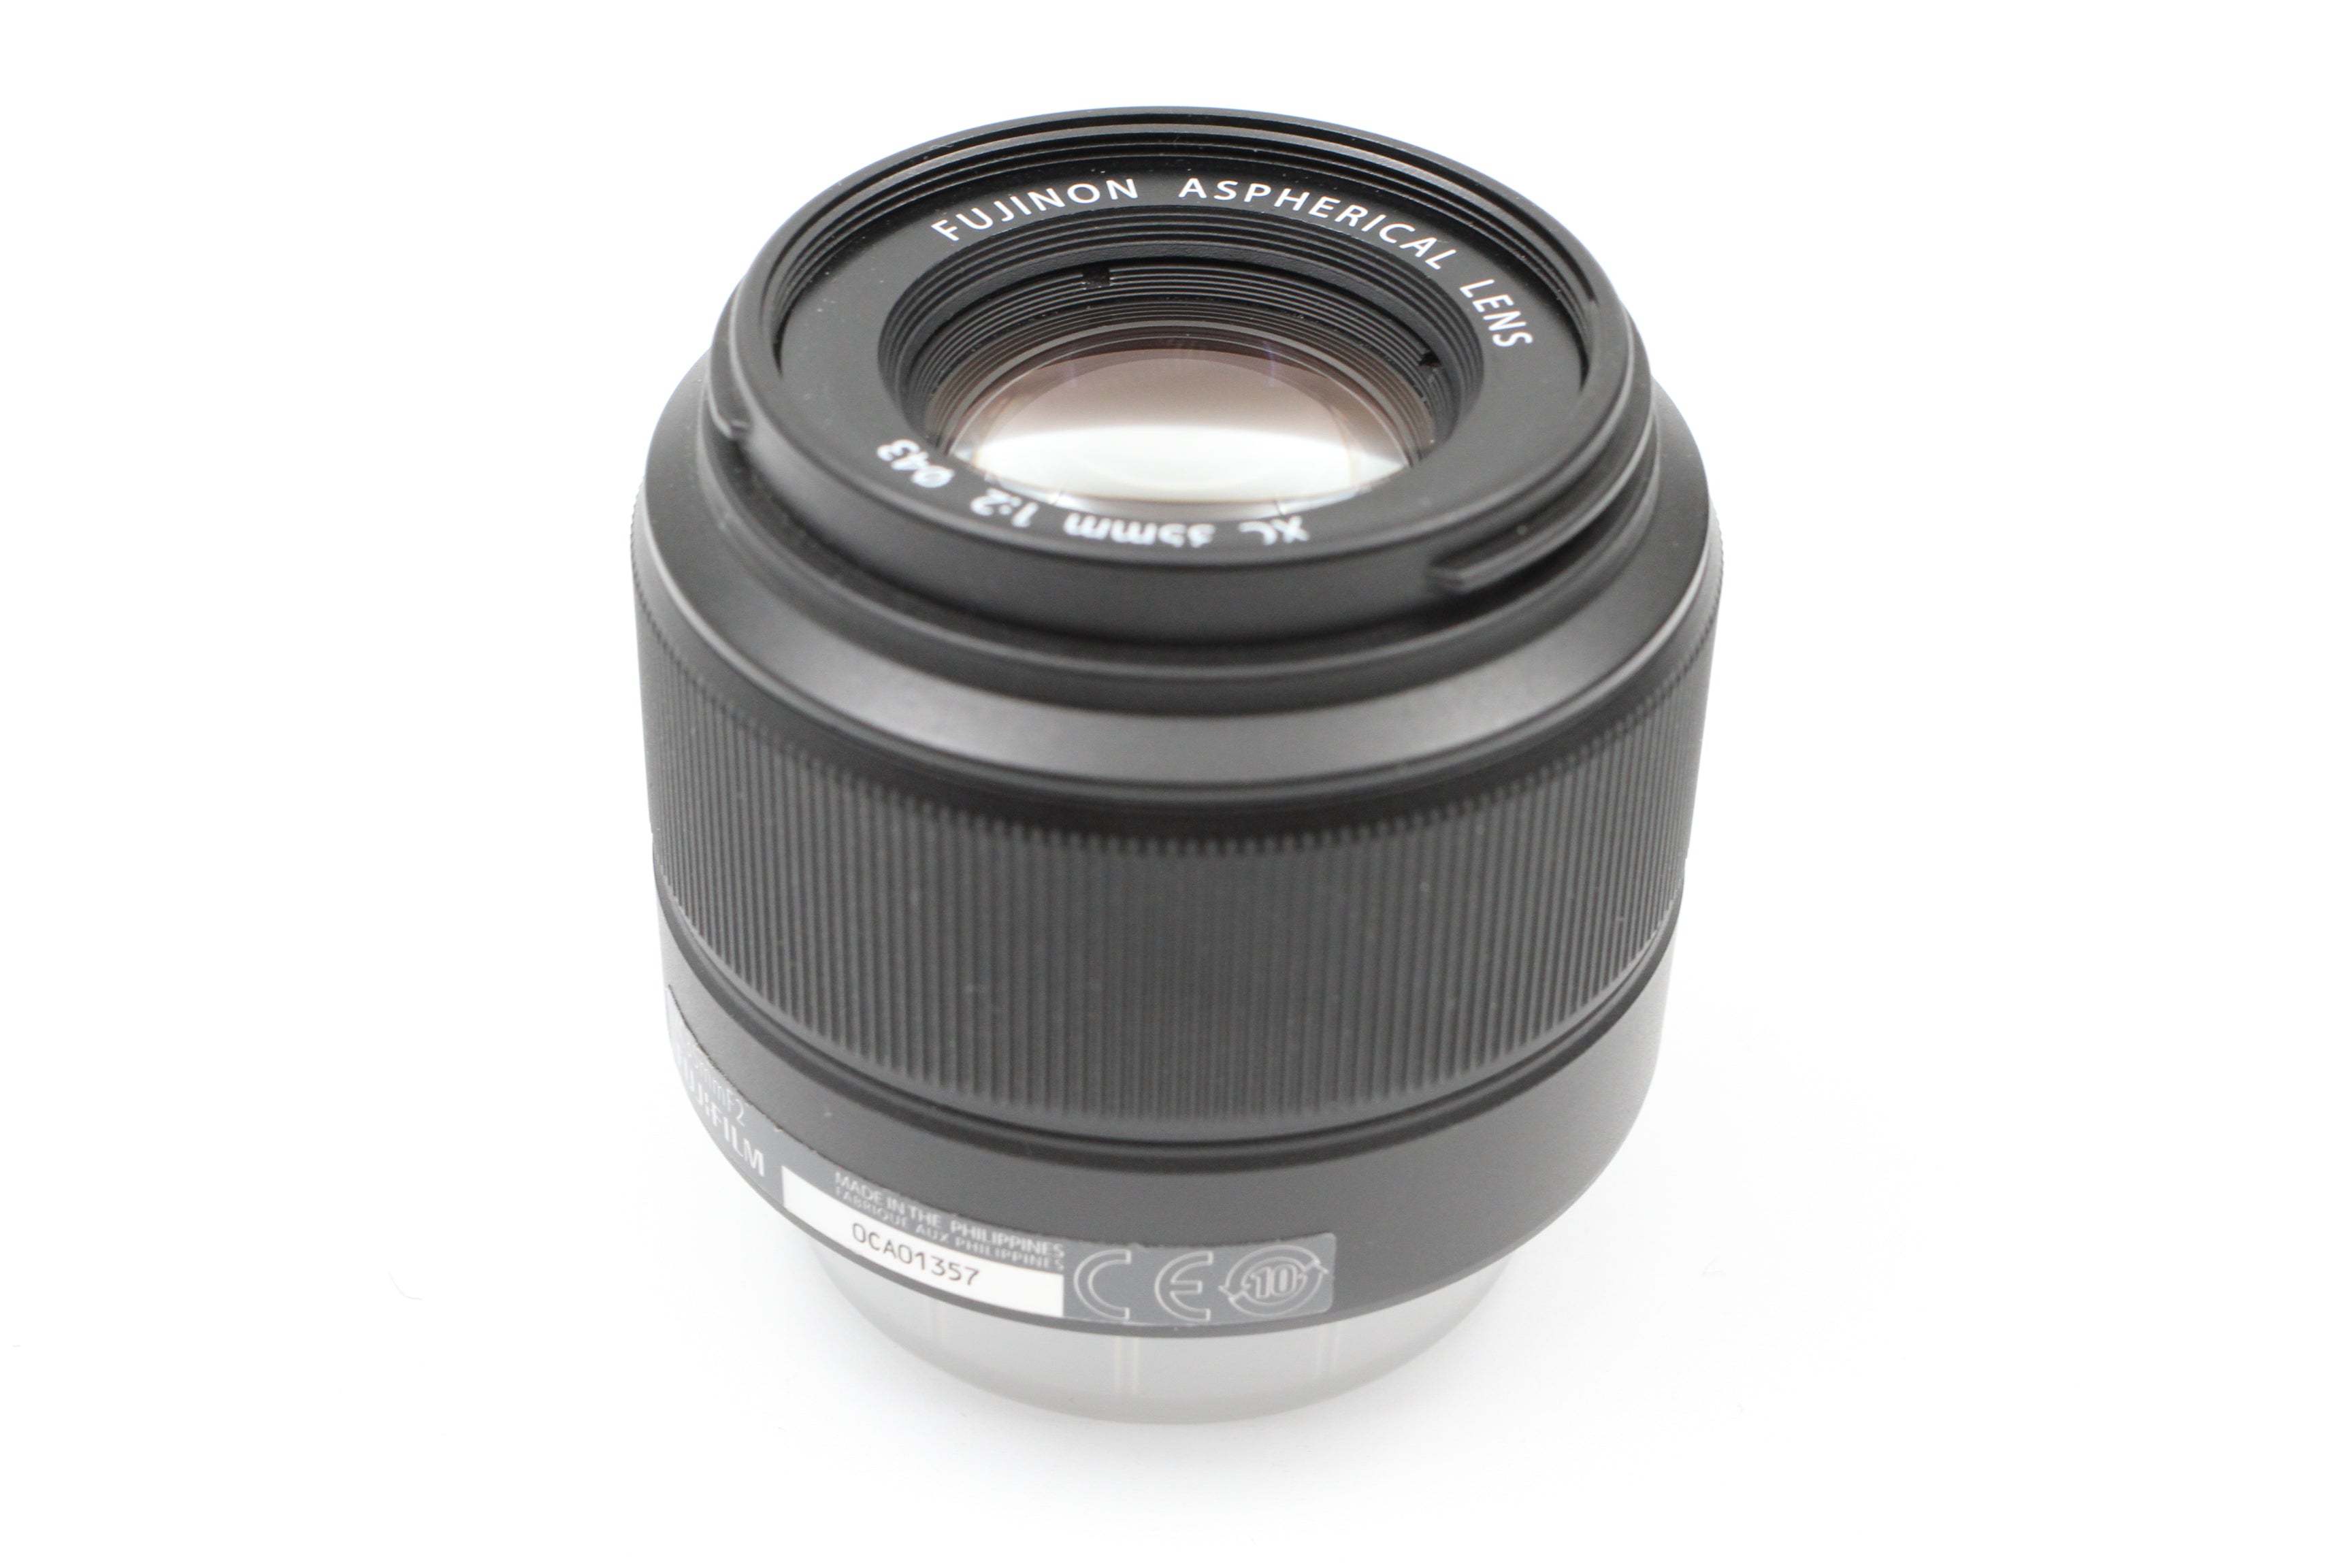 Fuji XC Aspherical 35mm f2 X-Mount Lens, Boxed